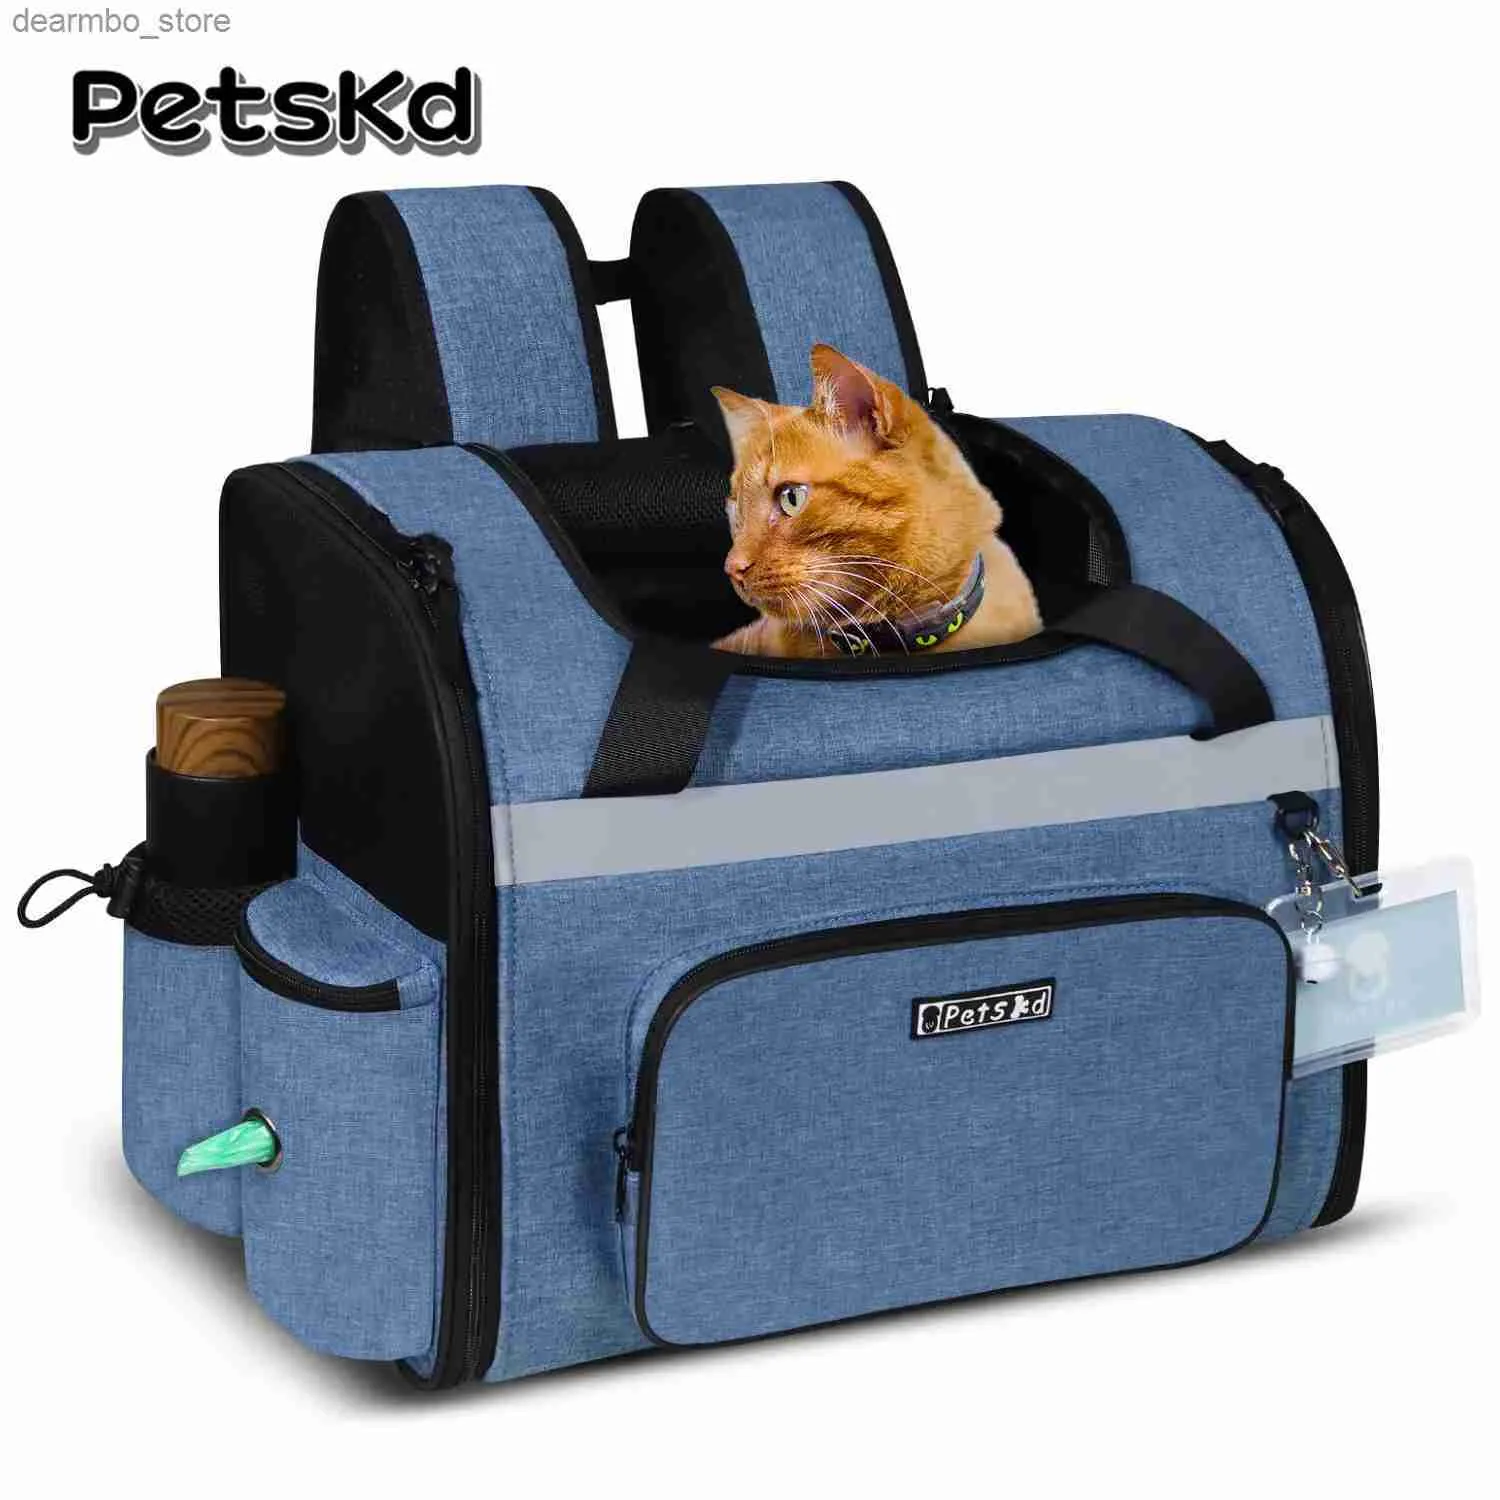 Hondendrager Petskd Pet Backpack Carrier Southwest Airline goedgekeurde Cat Travel Backpack voor kleine DO Carrier BA met veiligheidslot Zipper L49